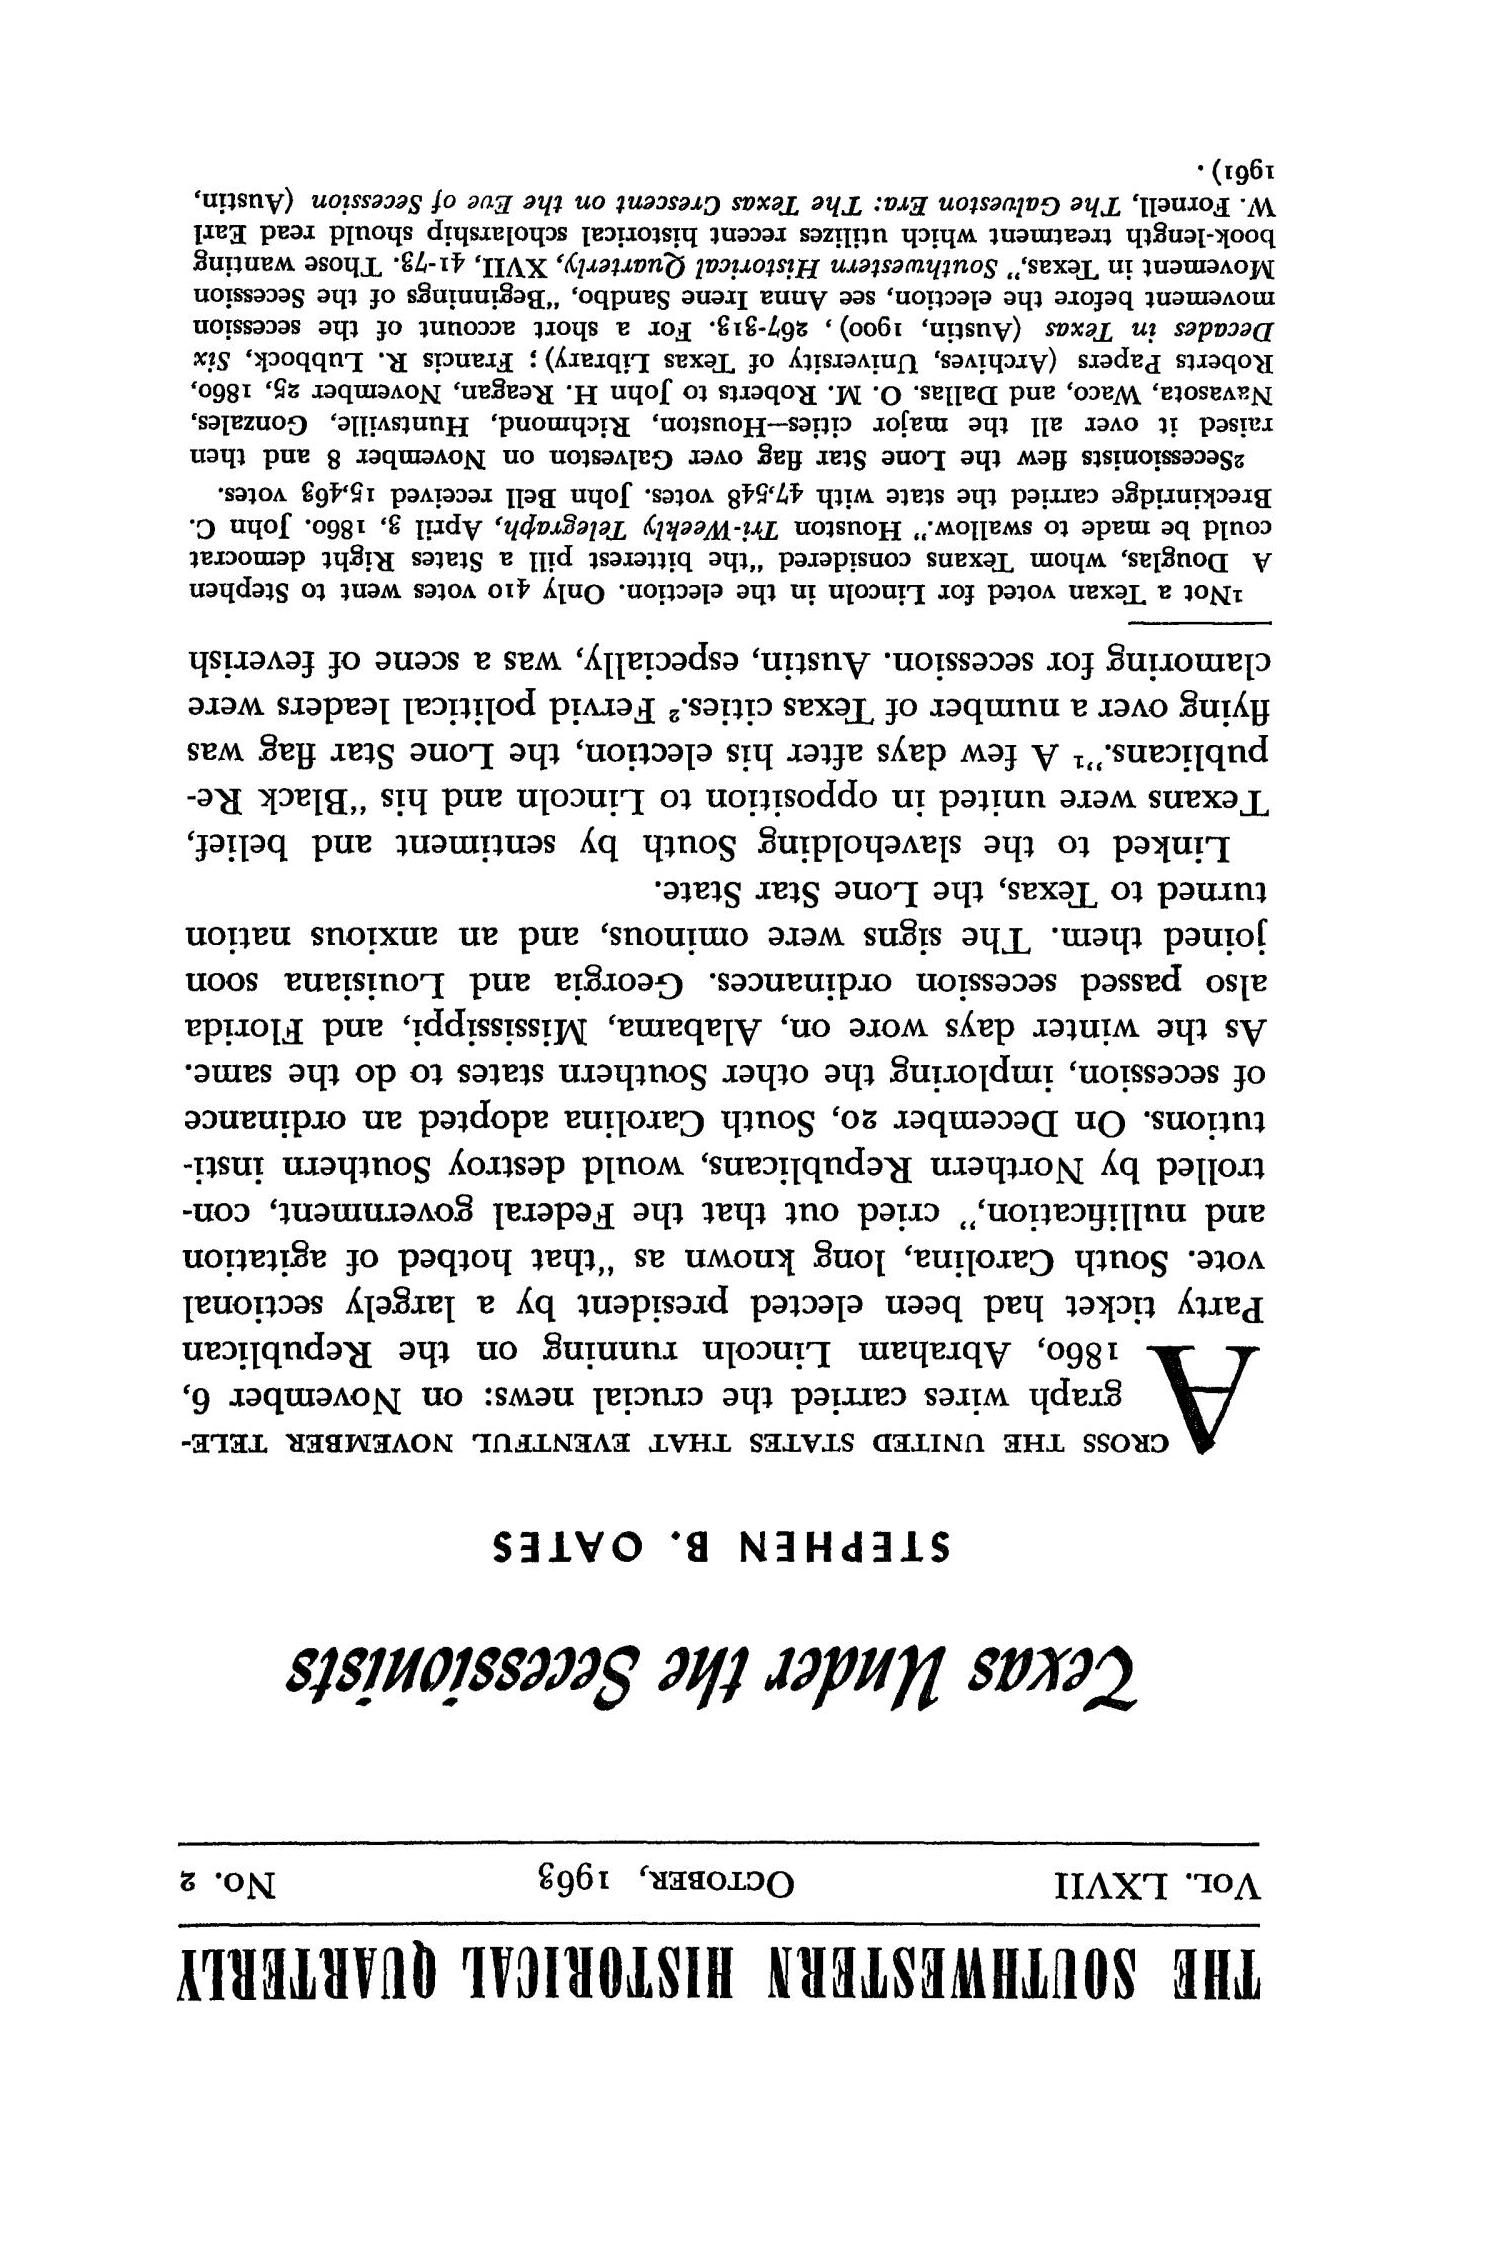 The Southwestern Historical Quarterly, Volume 67, July 1963 - April, 1964
                                                
                                                    167
                                                